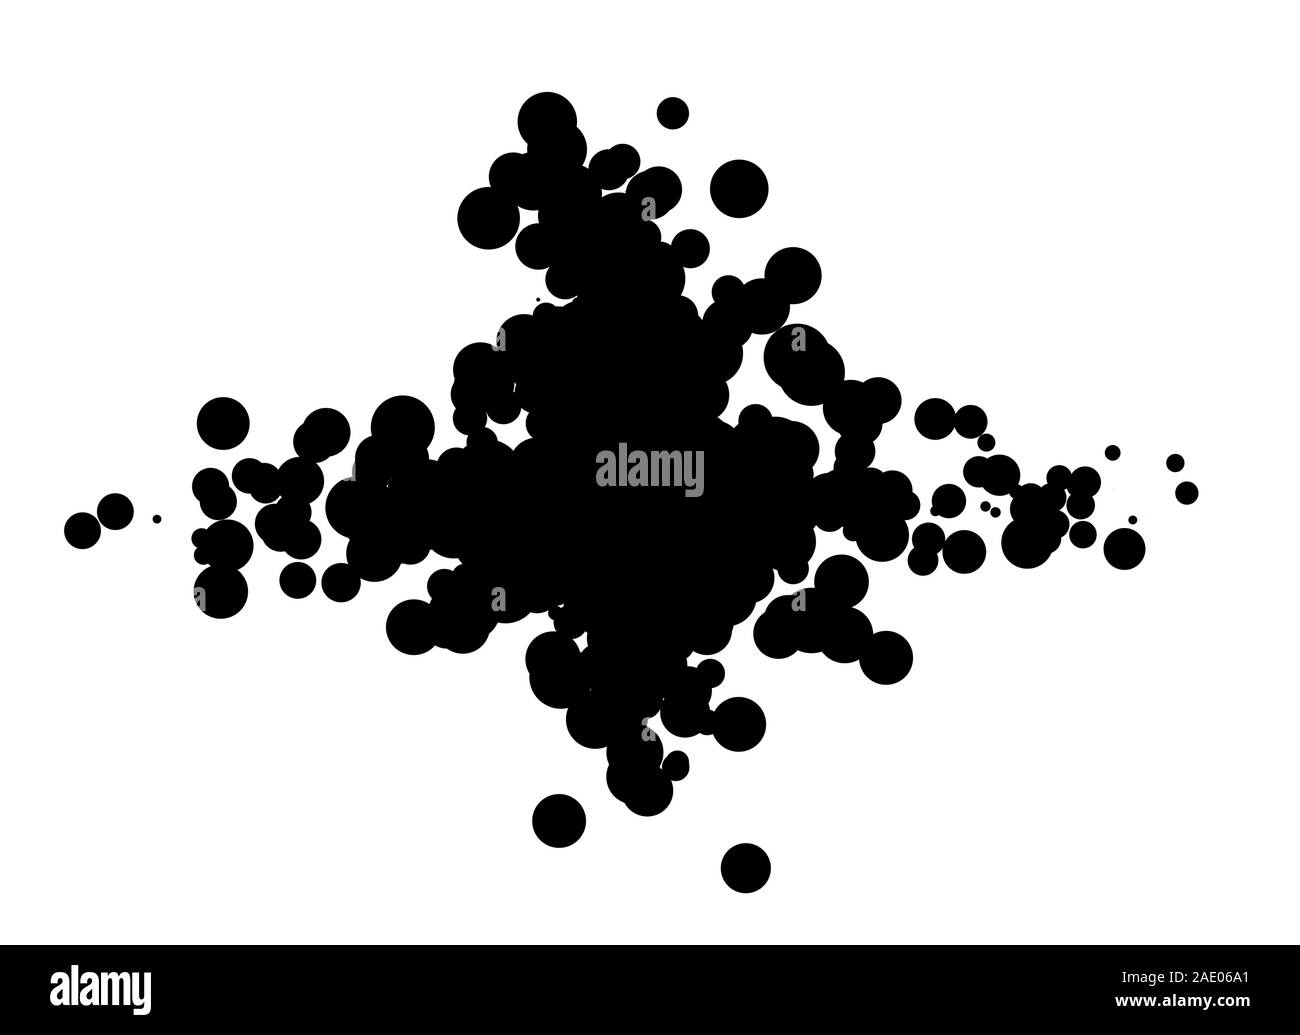 Black Dots Pattern Design Stock Photo